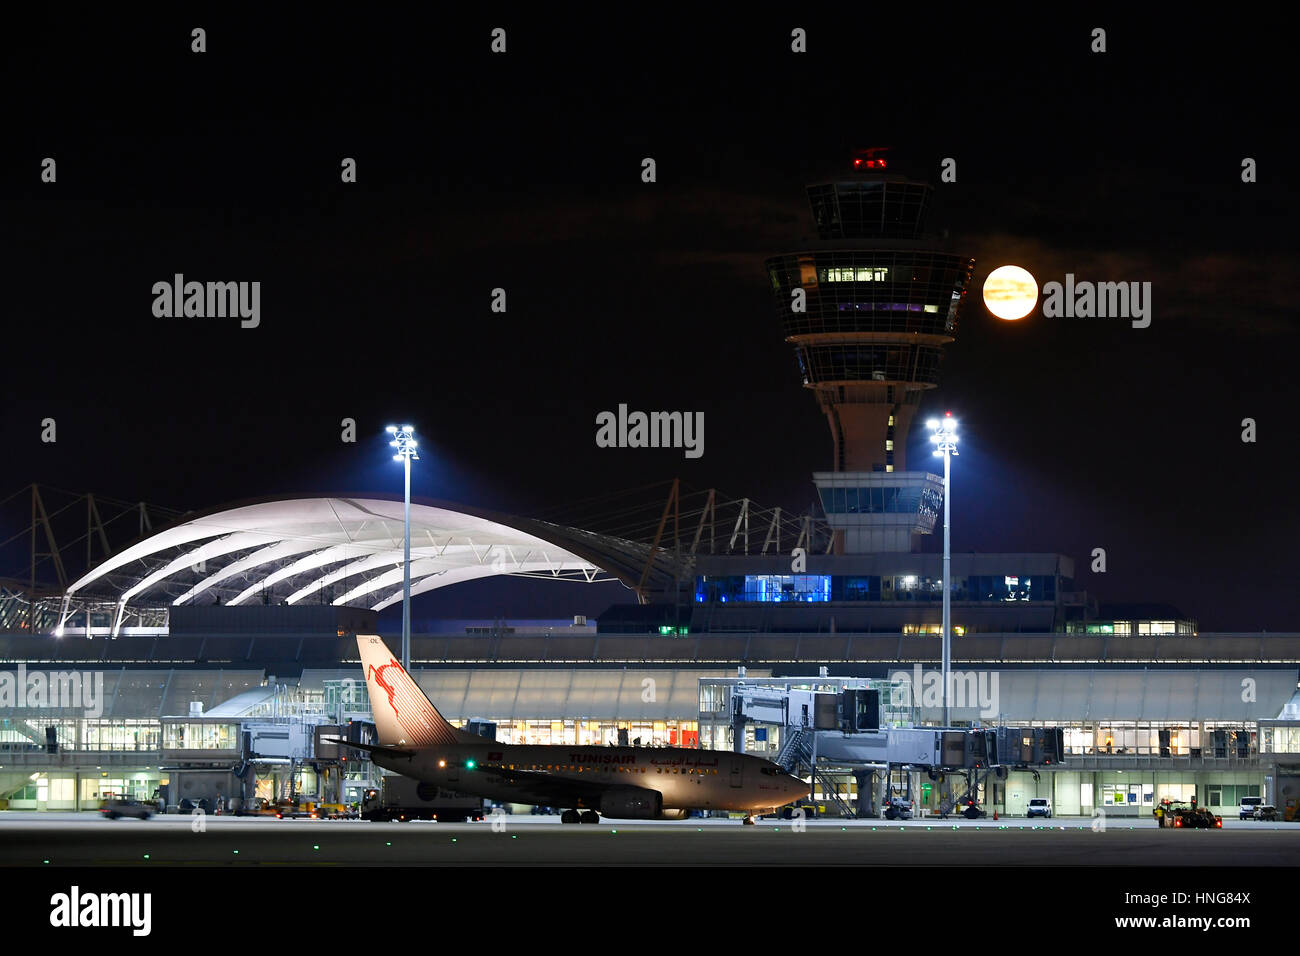 Tower with full moon, Terminal 1, night, dark, sky, cloud, light, Weather service, Air traffic control, MUC, Airport Munich, Erding, Freising, Munich, Stock Photo